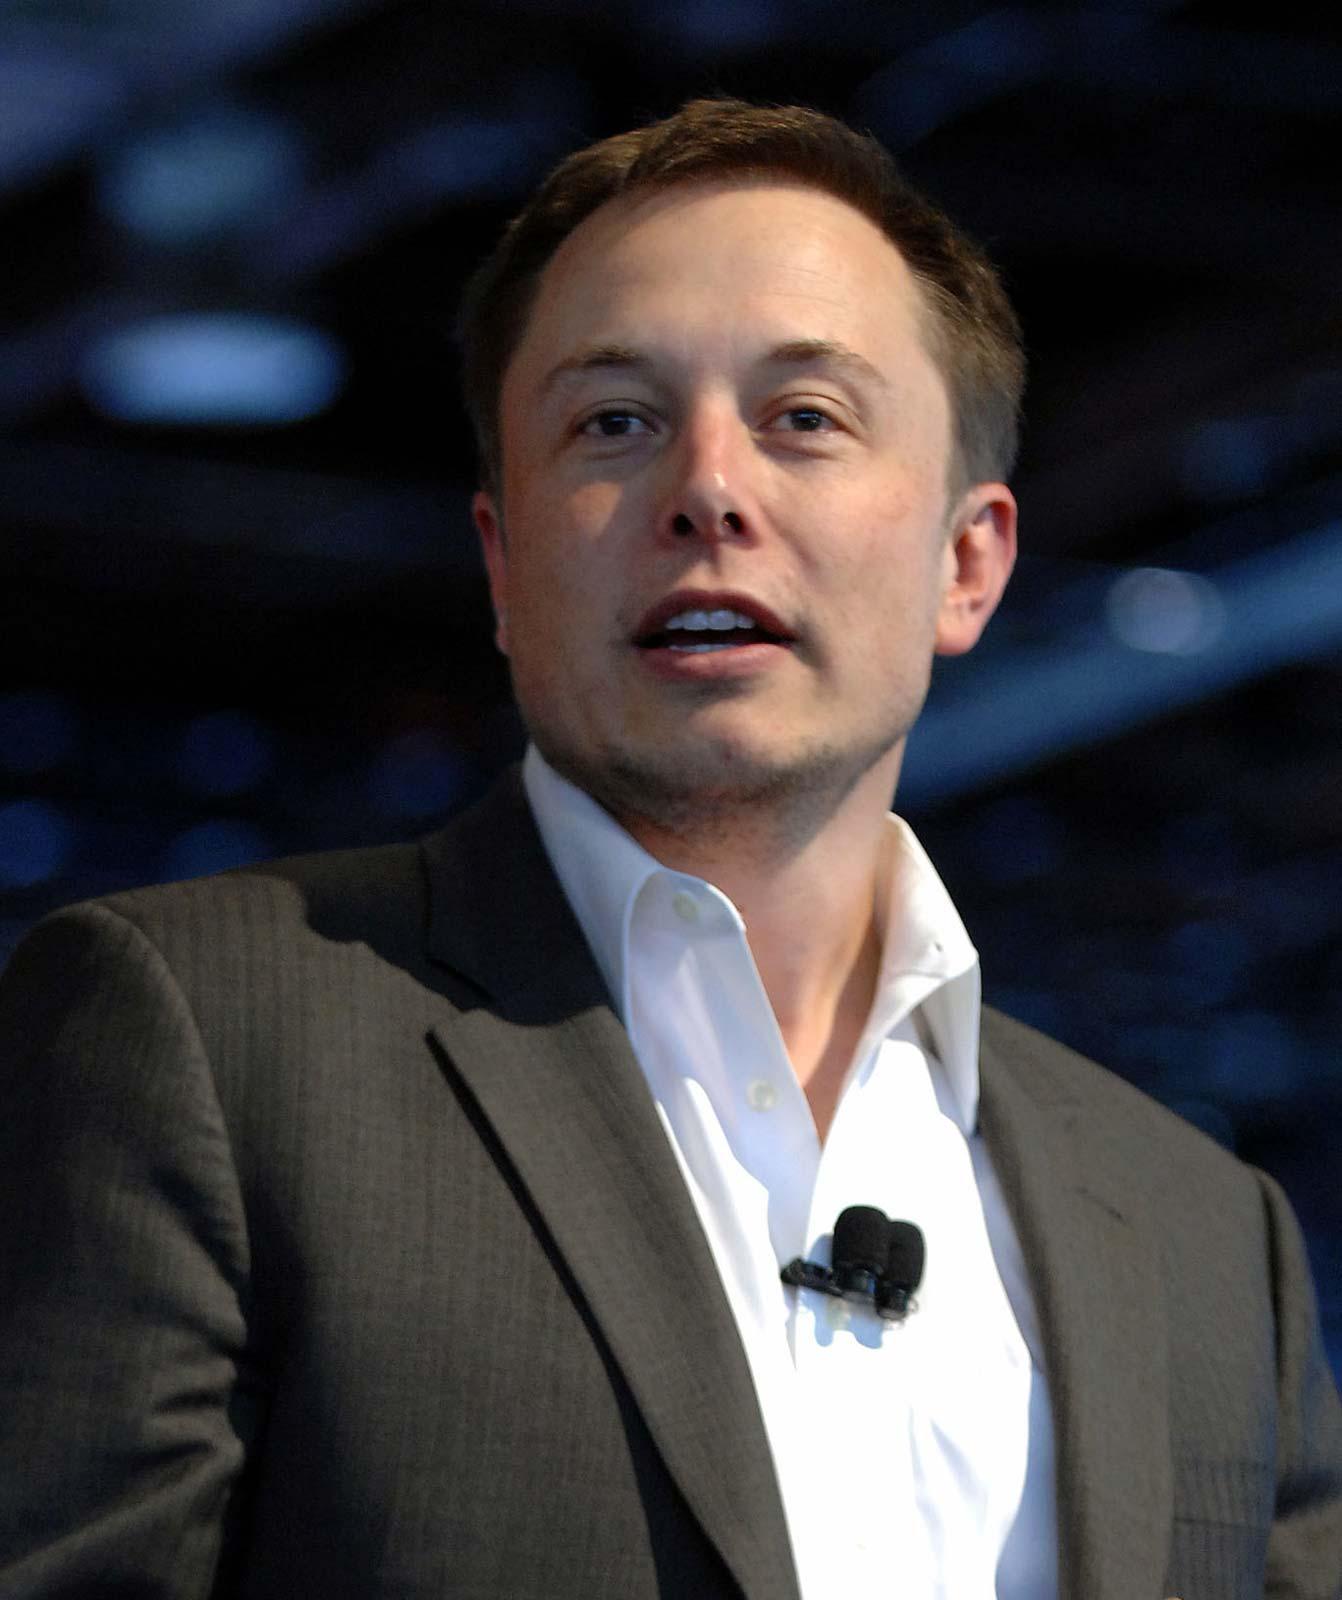 Elon Musk | Biography, SpaceX, Tesla, & Facts | Britannica